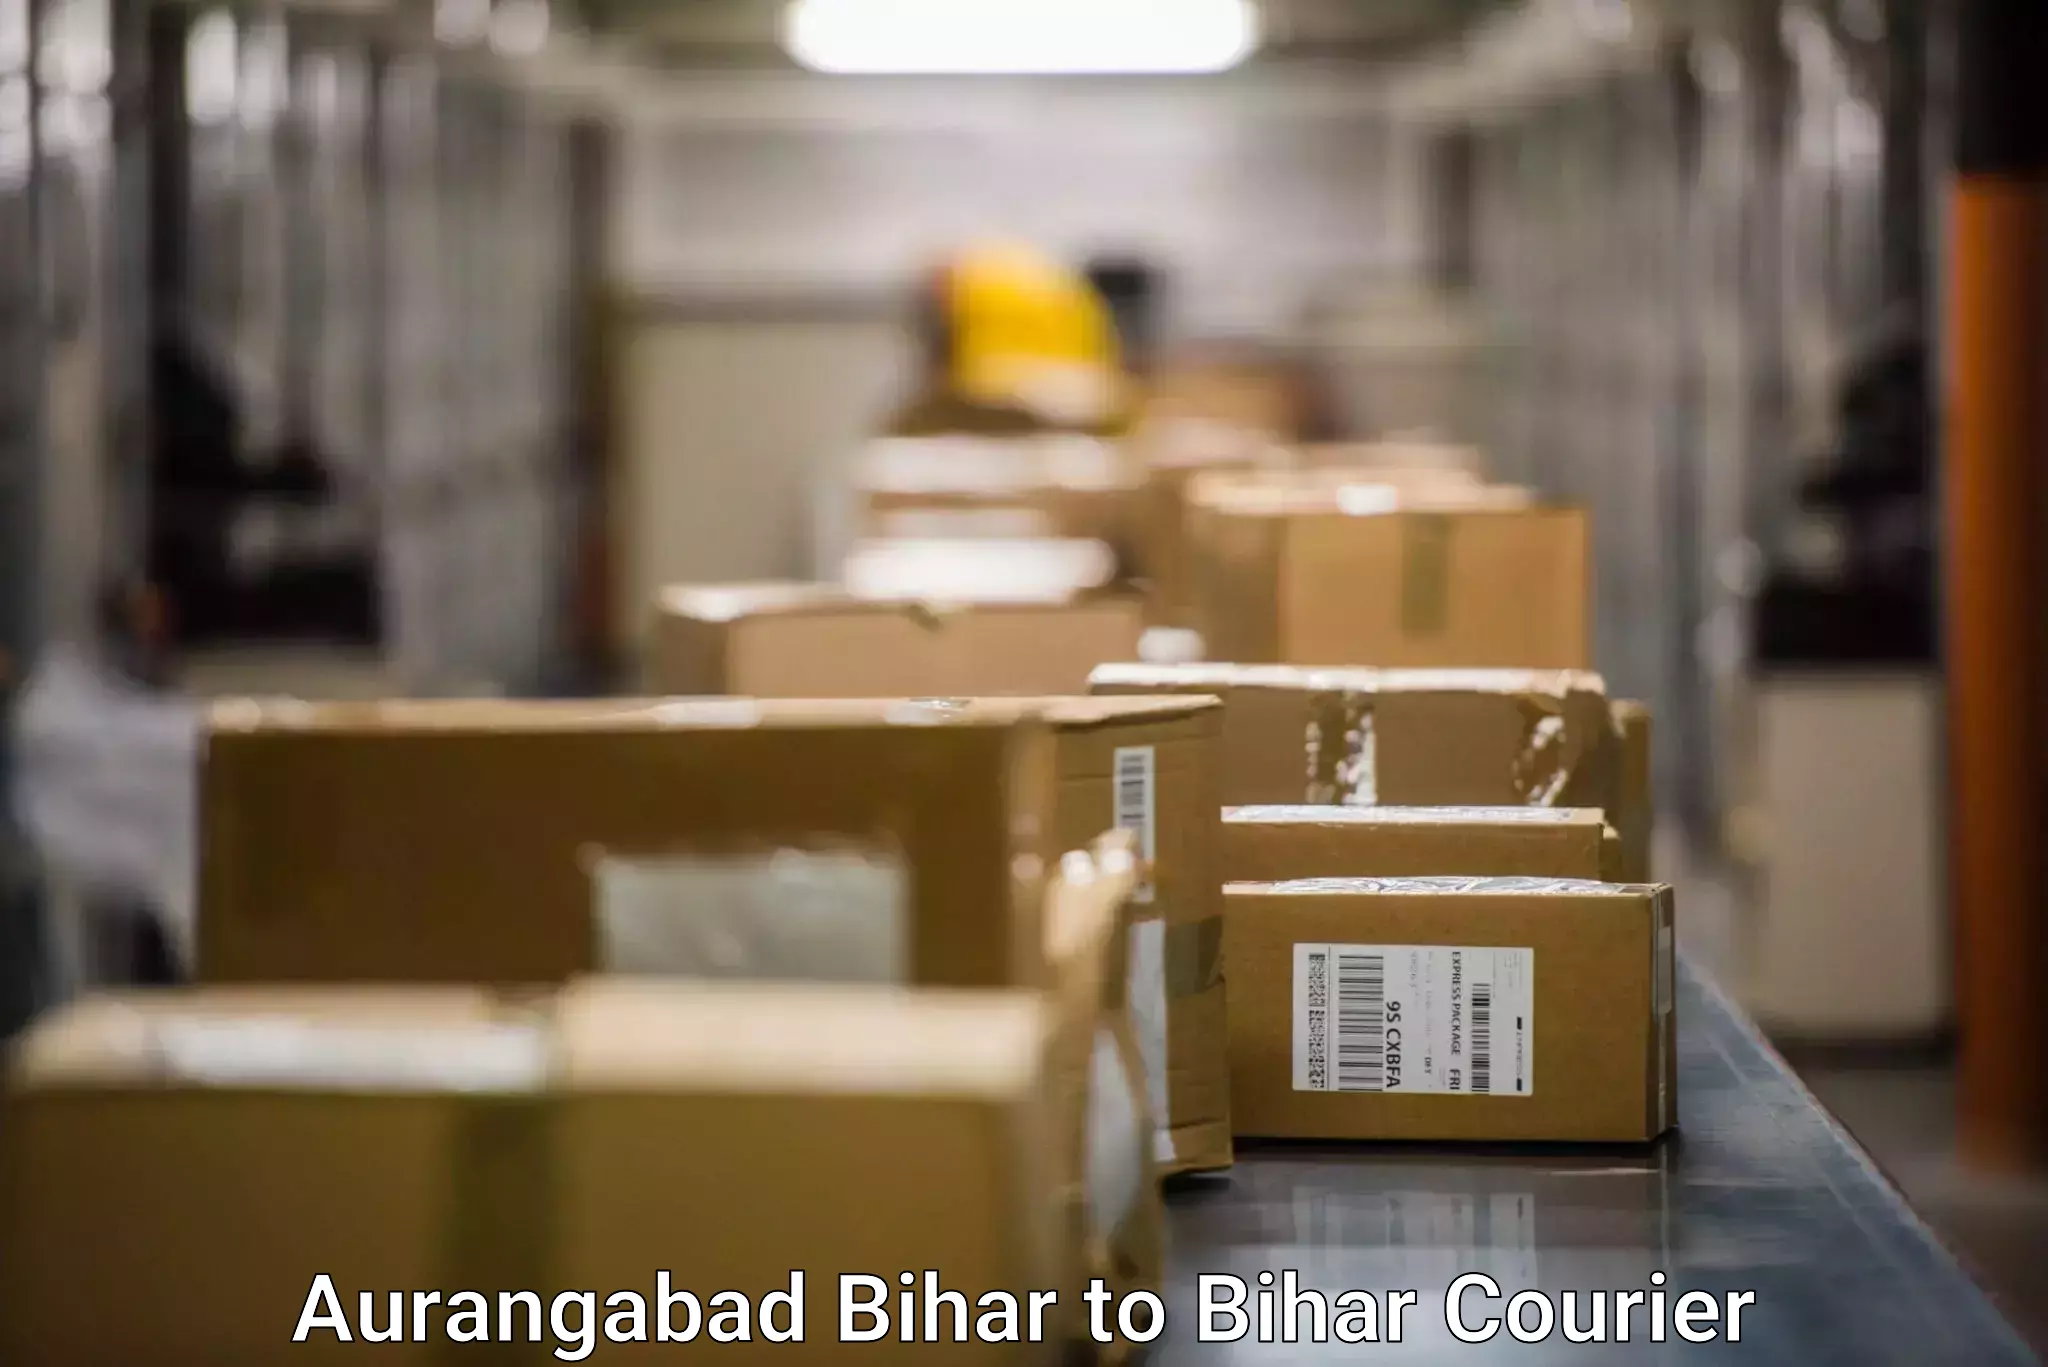 Small business couriers Aurangabad Bihar to Dumraon